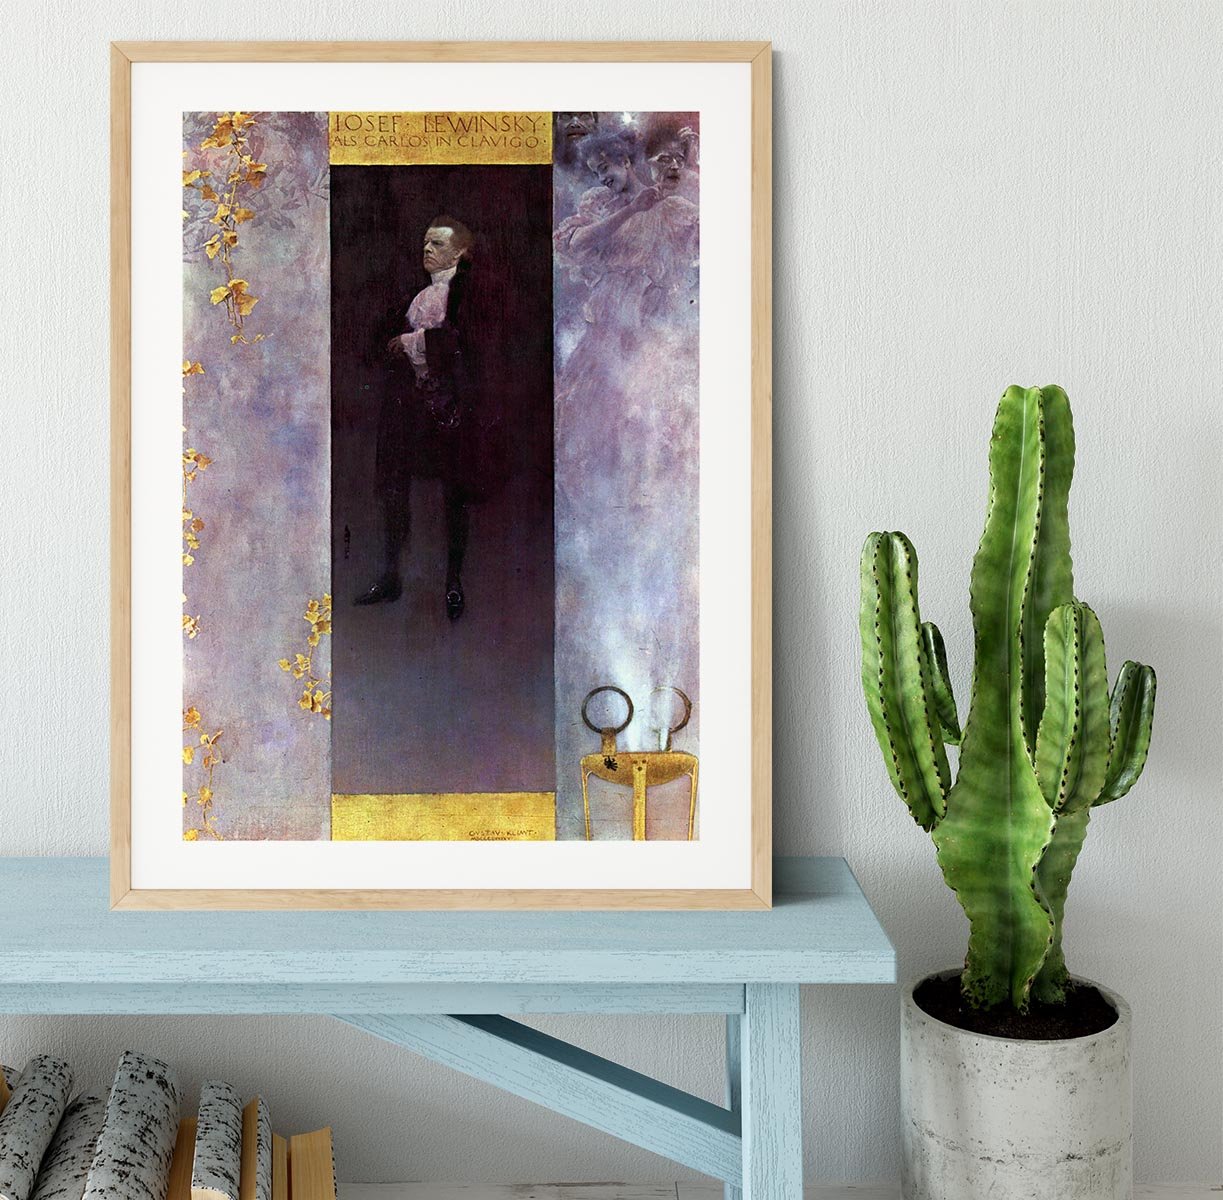 Hofburg actor Josef Lewinsky as Carlos by Klimt Framed Print - Canvas Art Rocks - 3